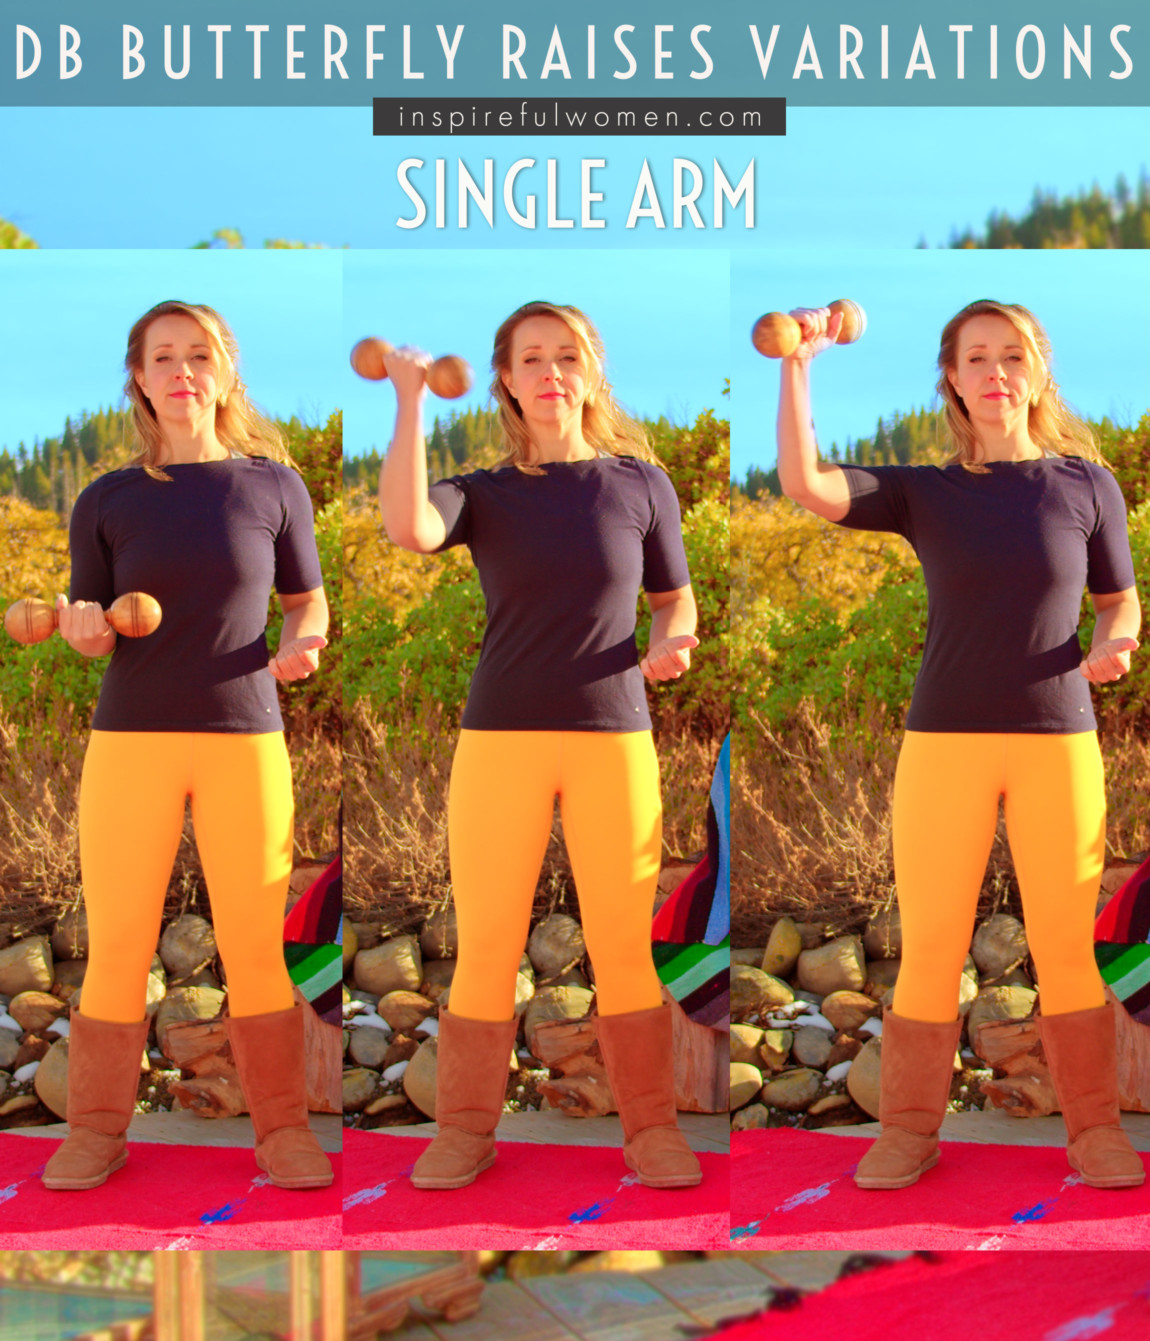 single-arm-butterfly-db-raises-deltoid-exercise-variation